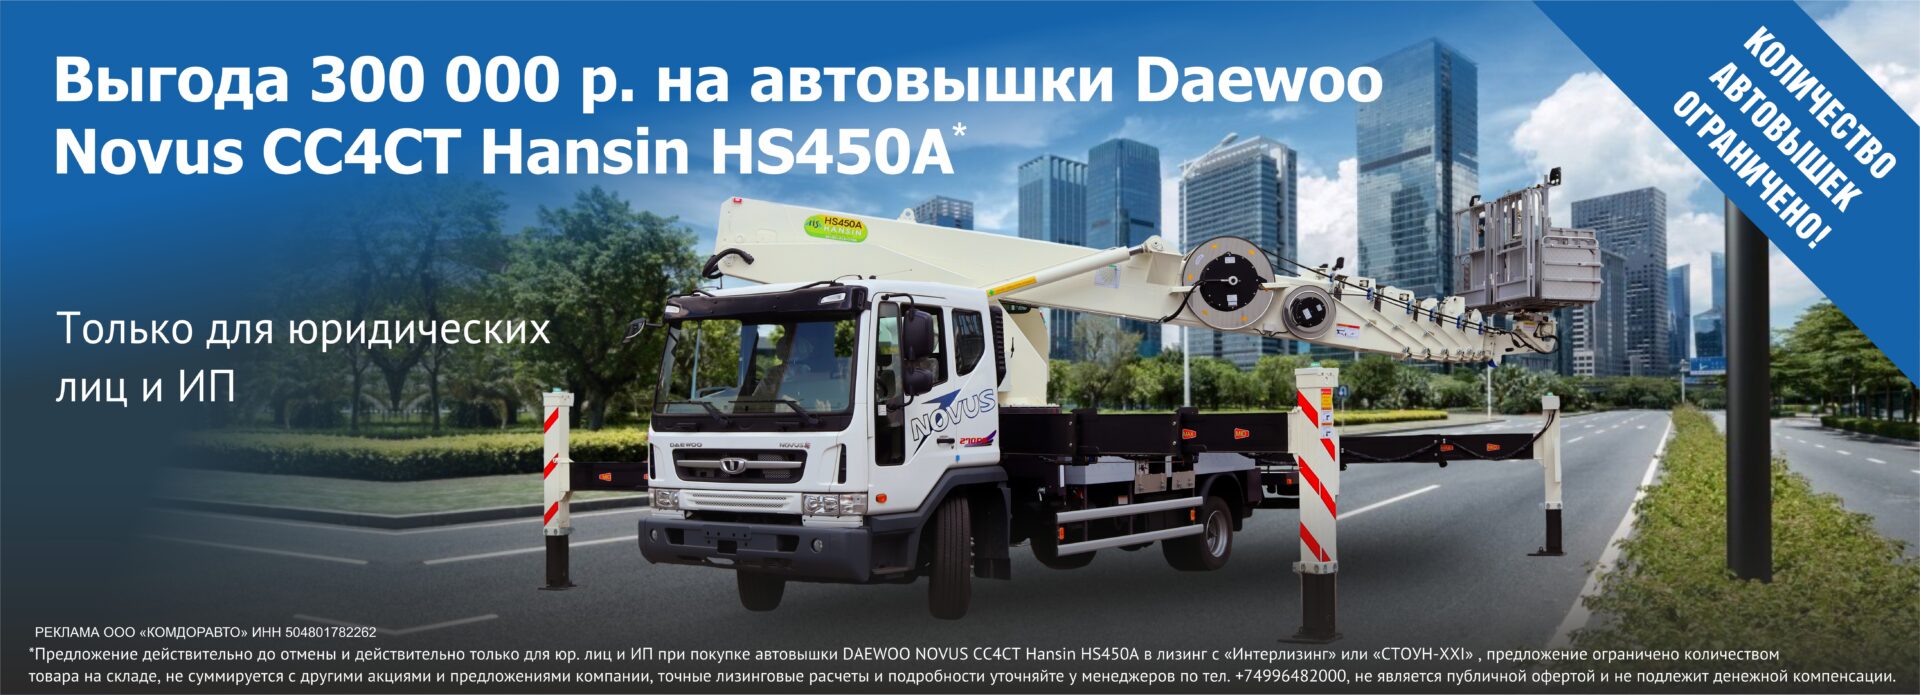 Выгода 300 000 р. на автовышку Daewoo Novus CC4CT Hansin HS450A.